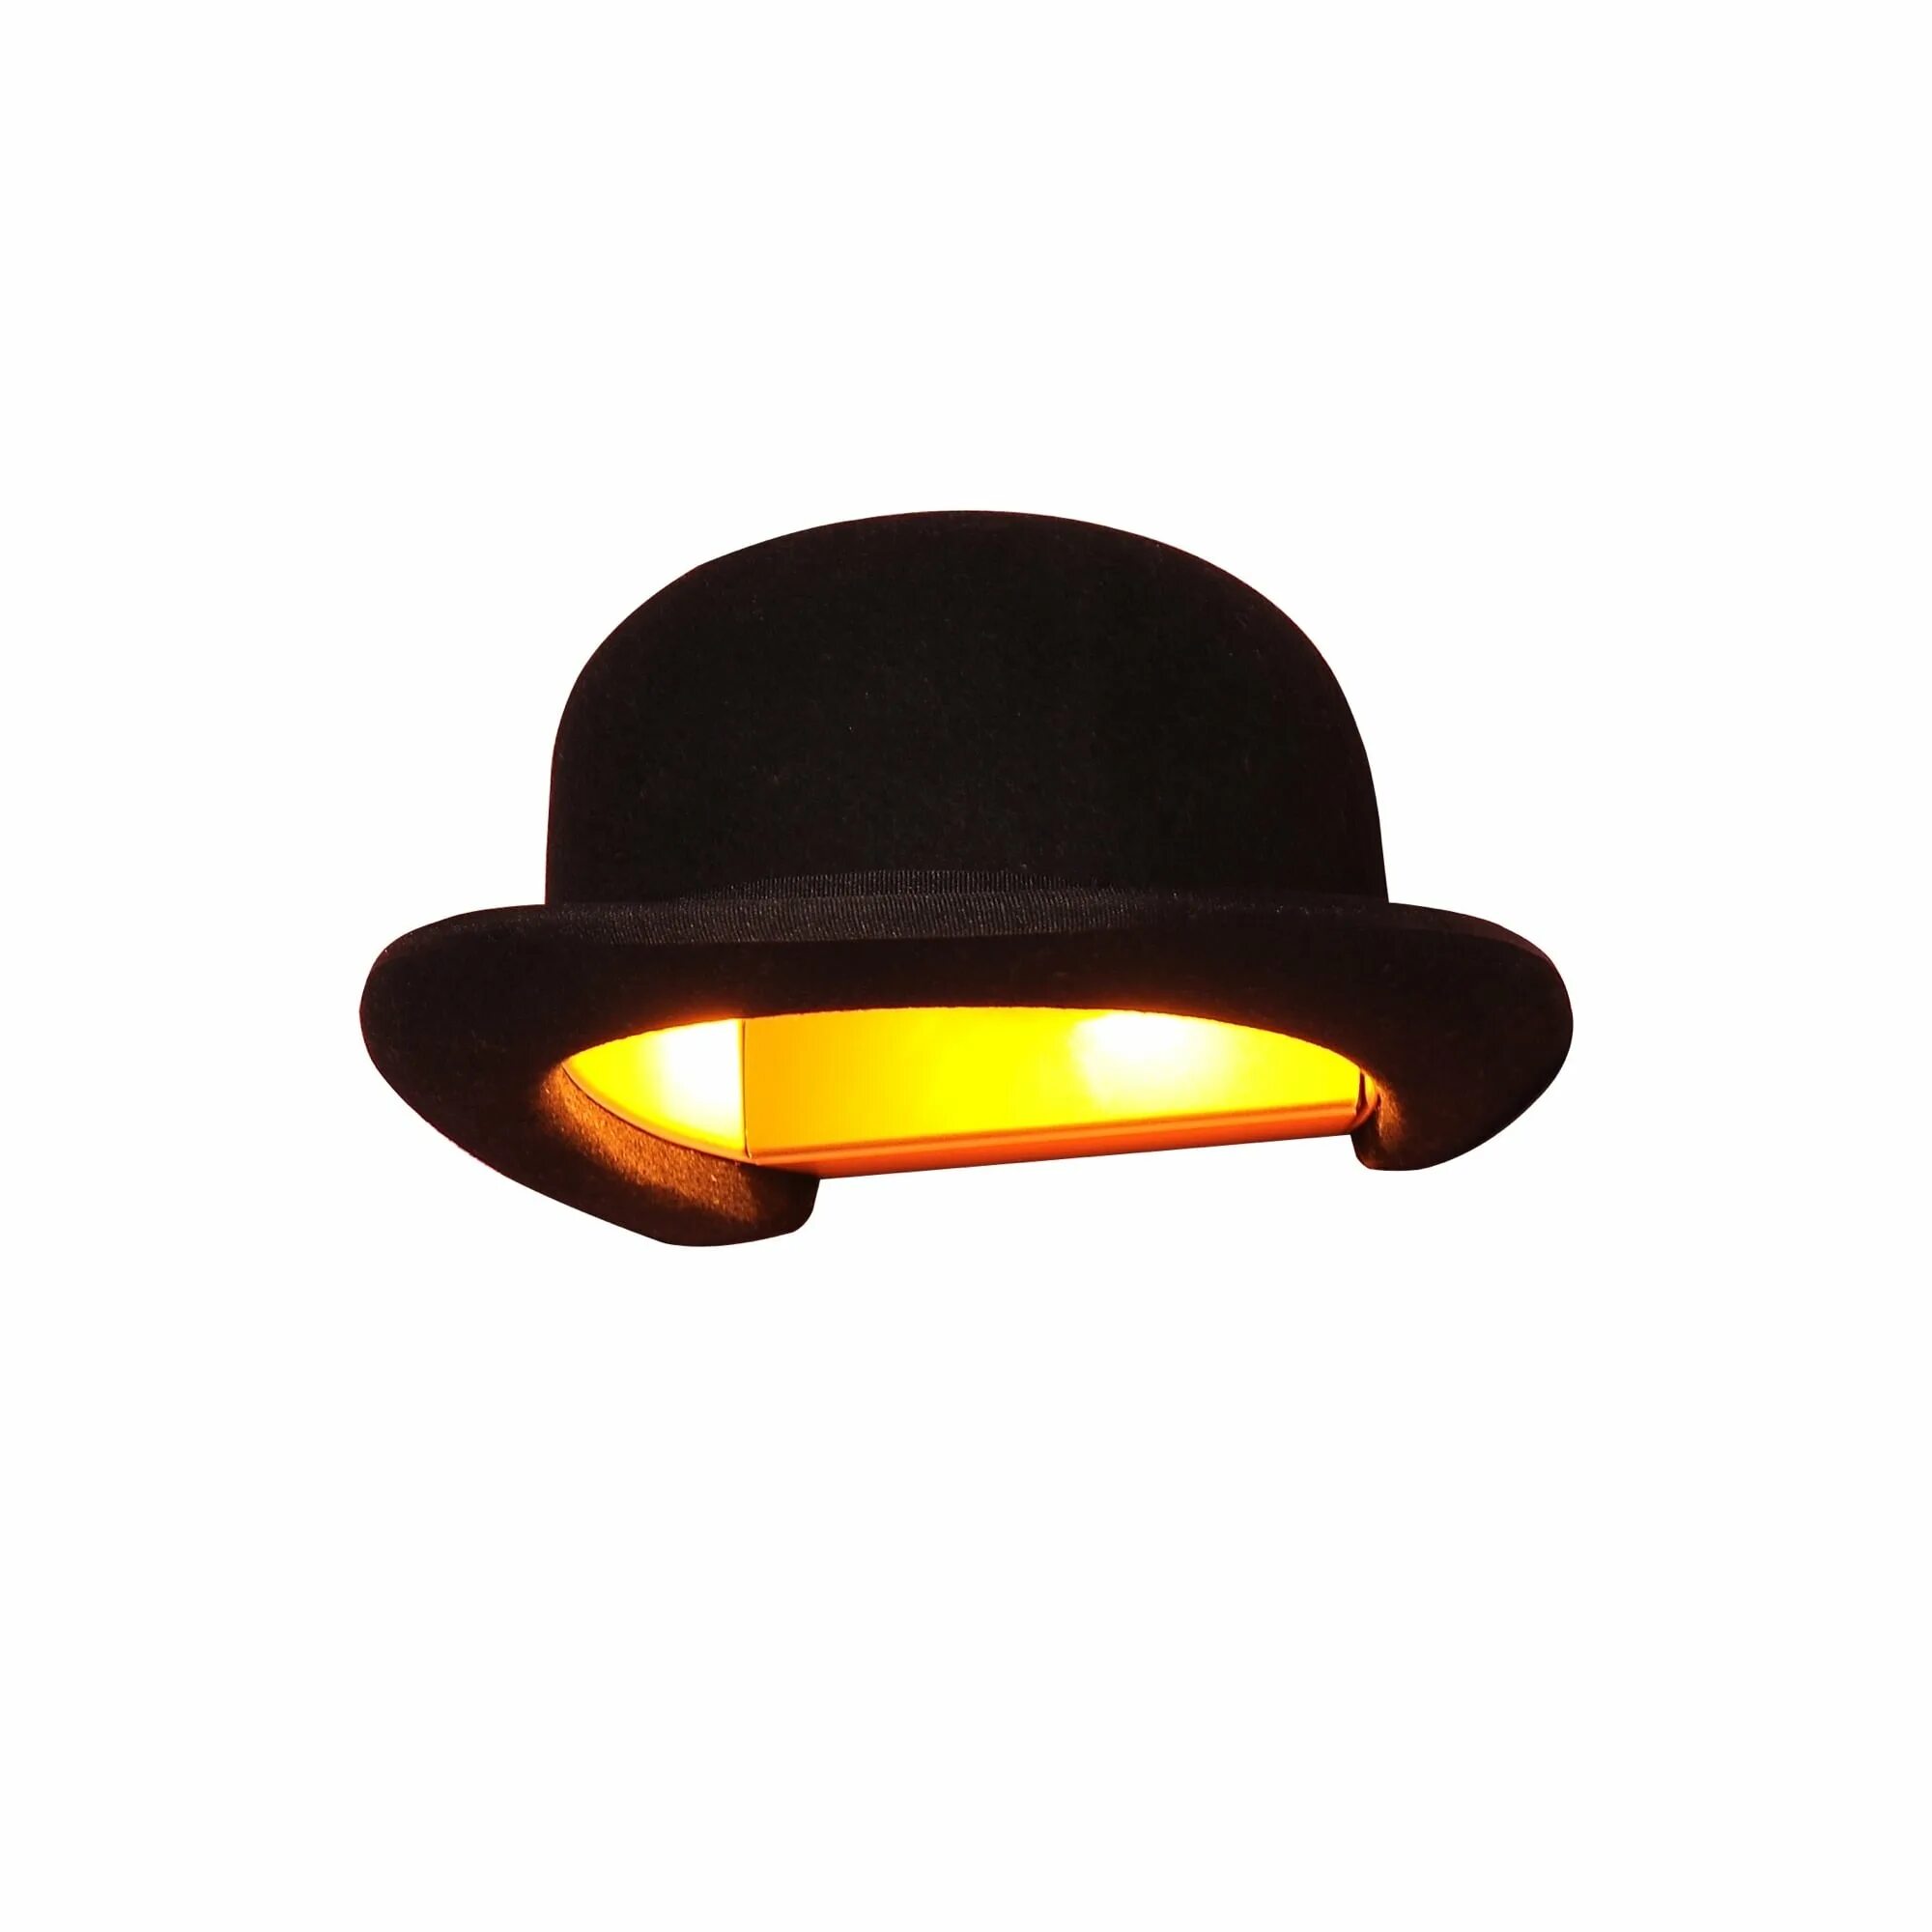 Light hat. Лампа шляпа. Лампочка в шляпе. Головной убор лампочка. Командирская шляпа с лампочками.